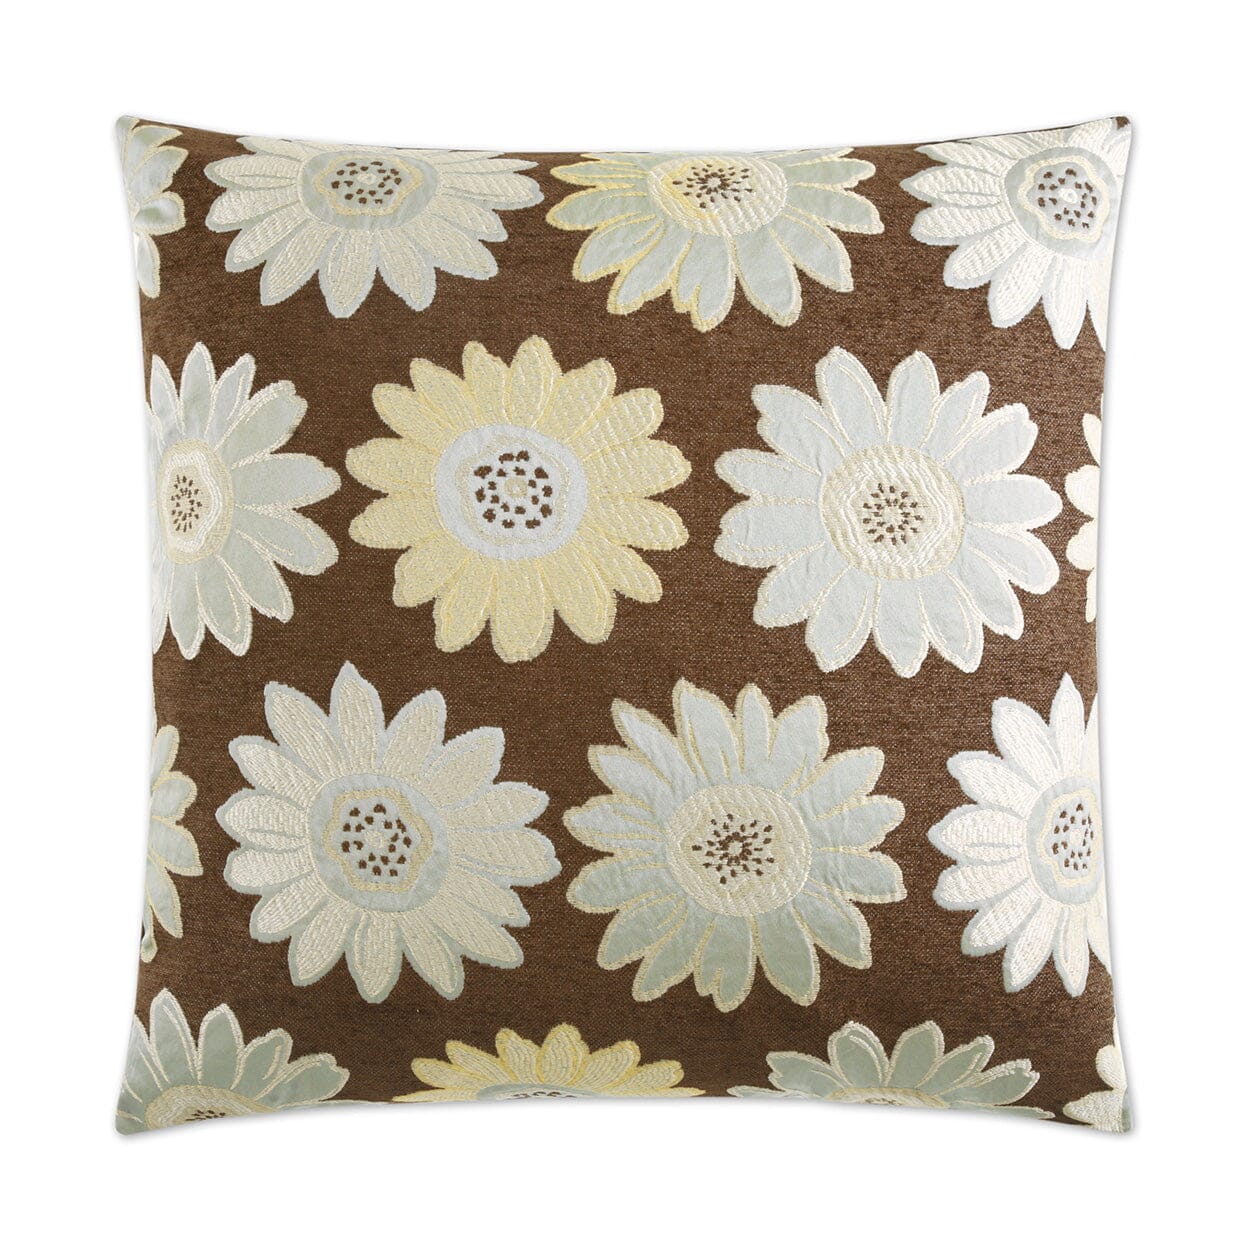 D.V. Kap Daisy May Decorative Throw Pillow | Aqua Pillows D.V Kap Home